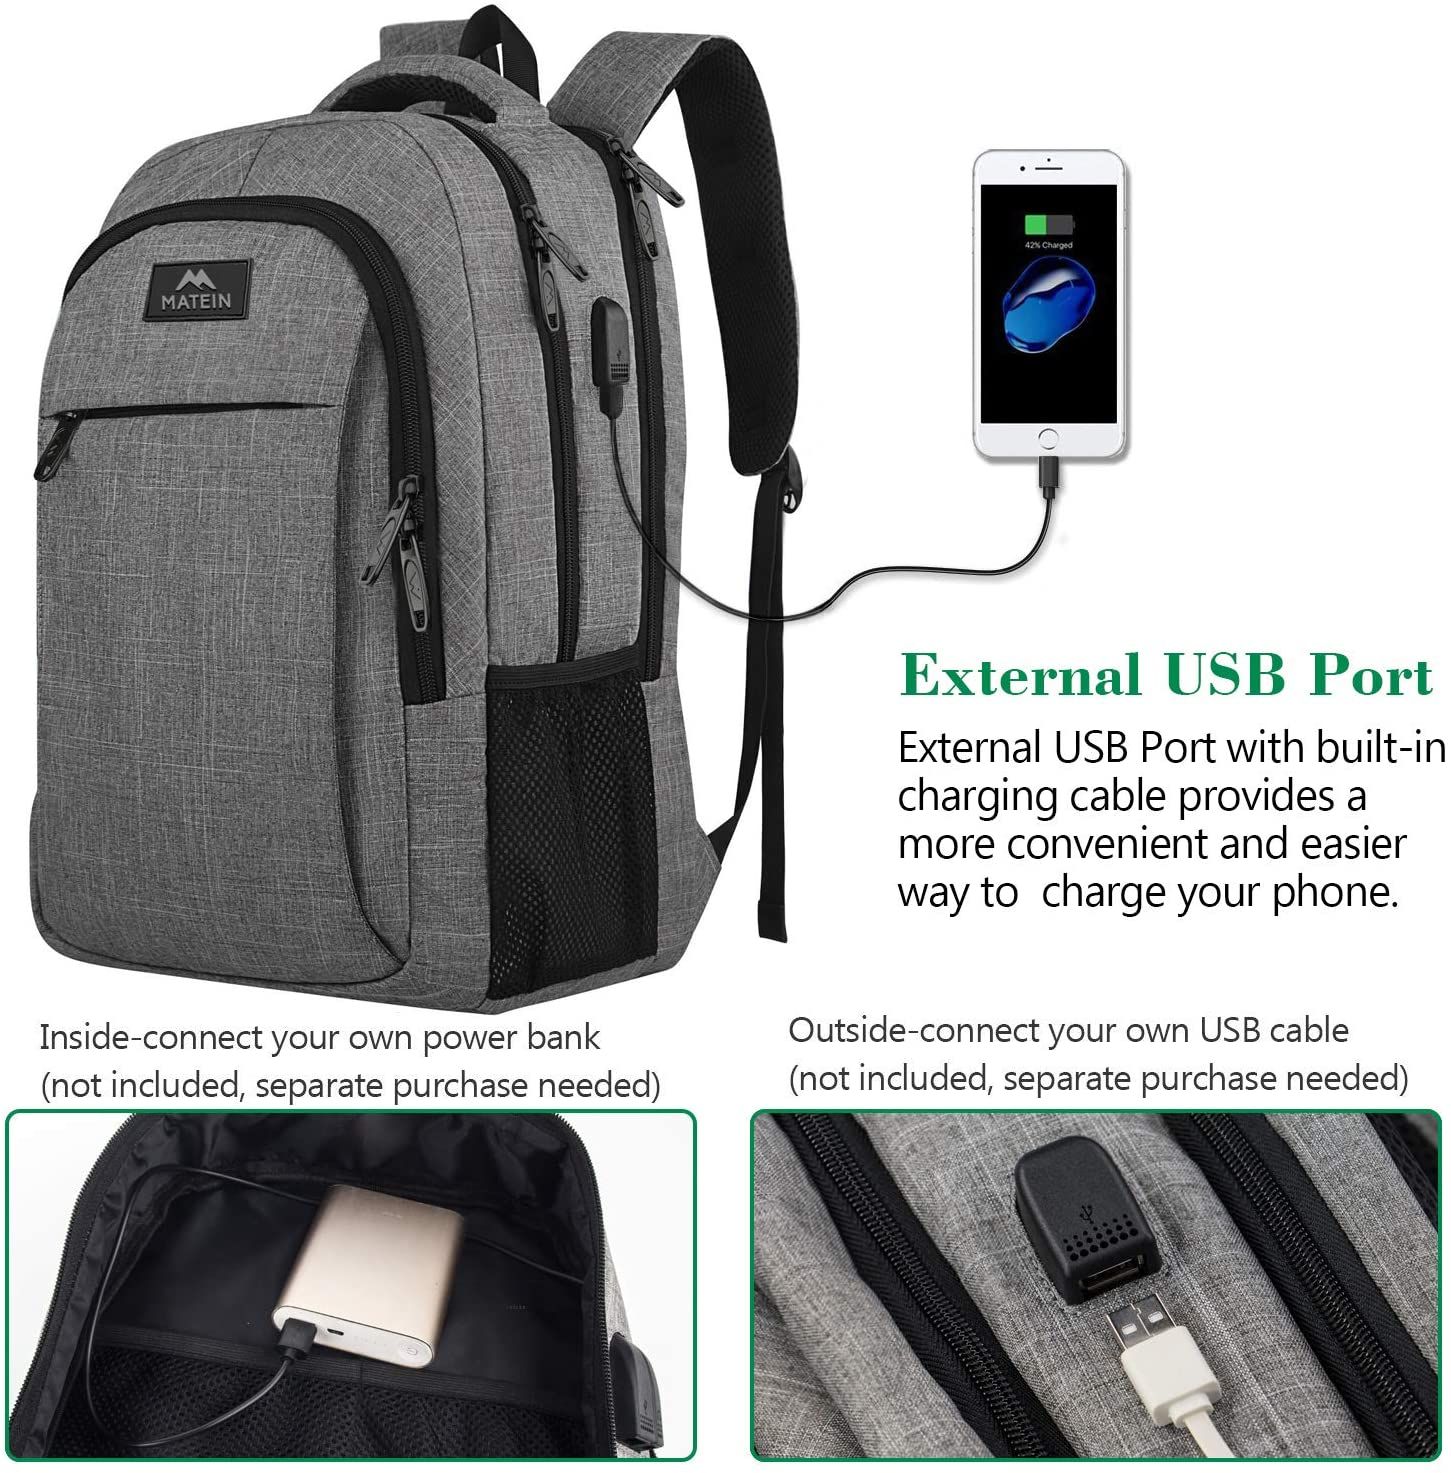 Matein Travel Laptop Backpack usb port